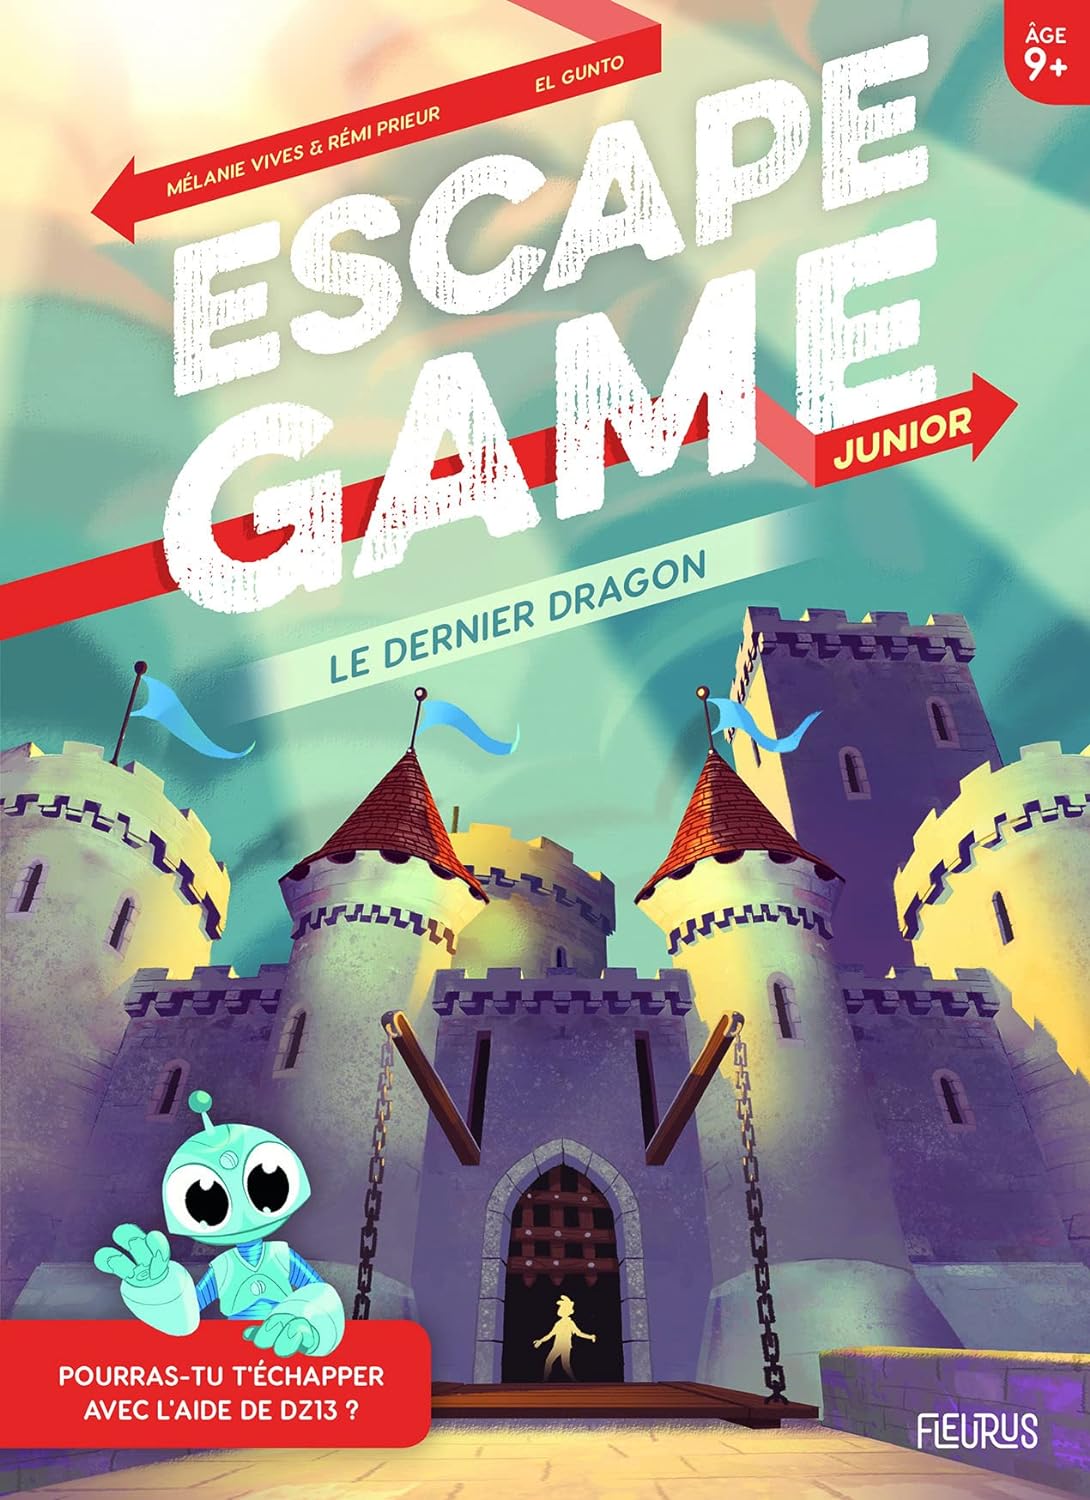 Escape Game Junior - Le dernier dragon